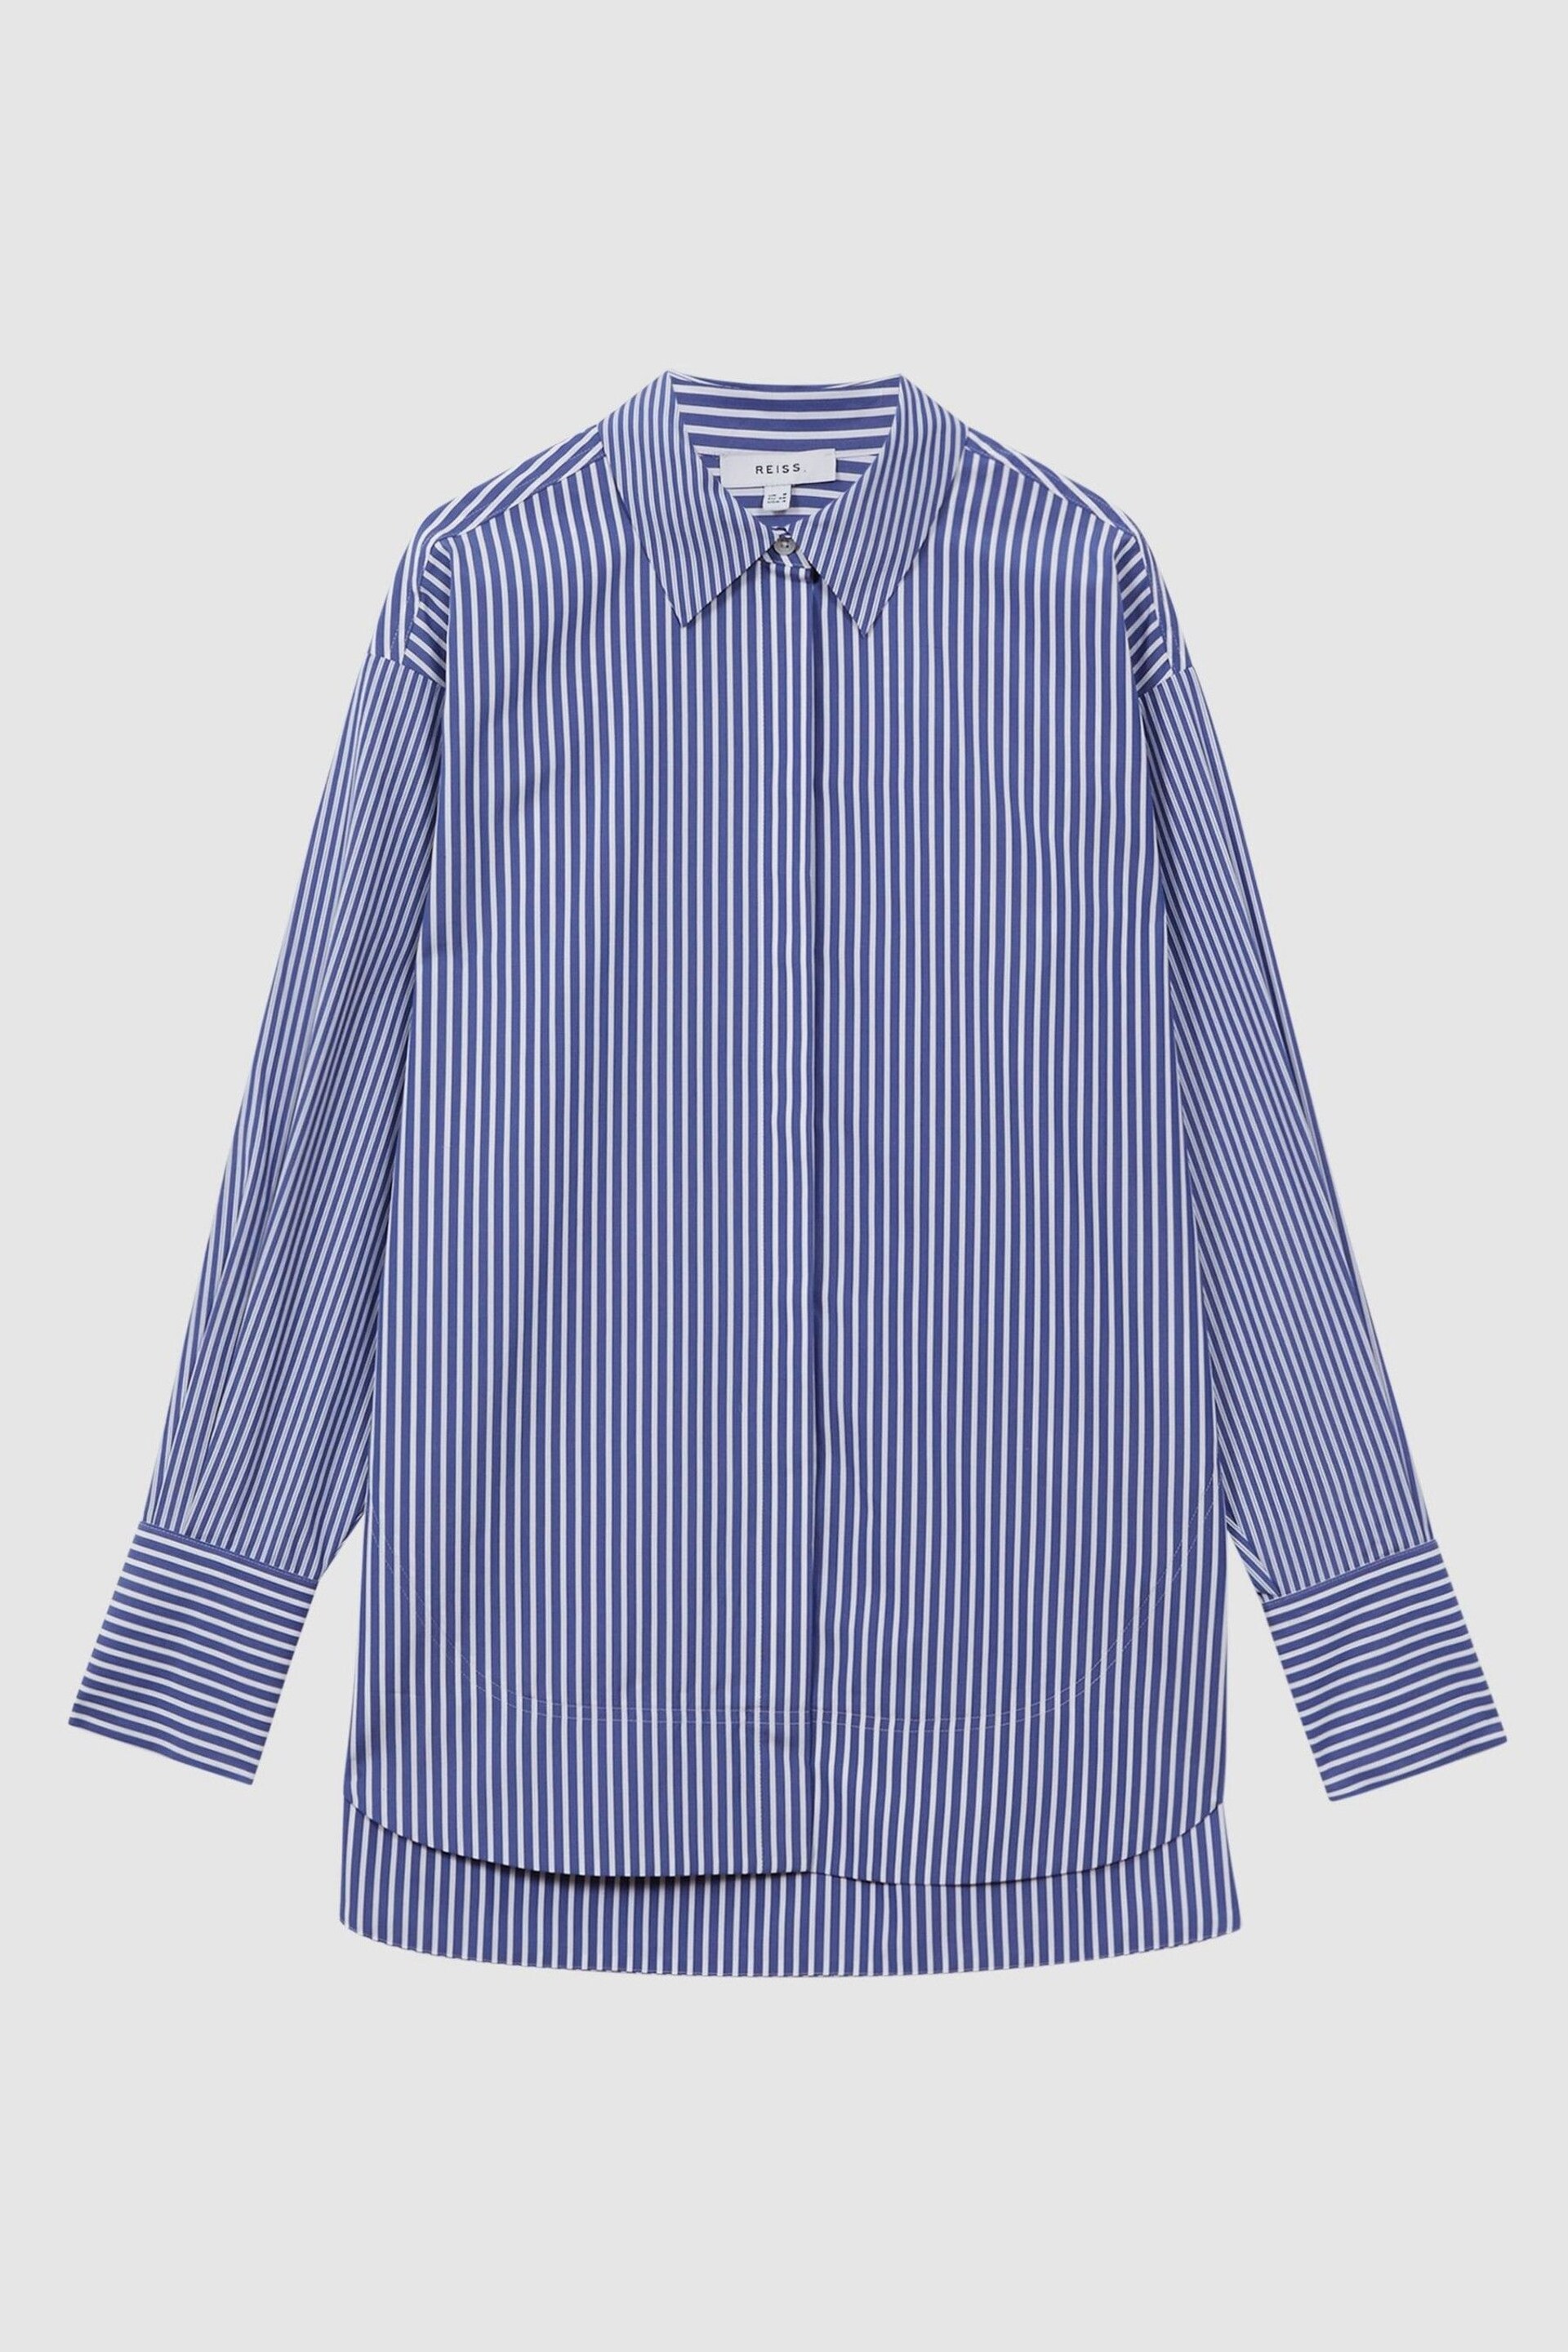 Reiss Blue/White Danica Oversized Cotton Side Stripe Shirt - Image 2 of 6